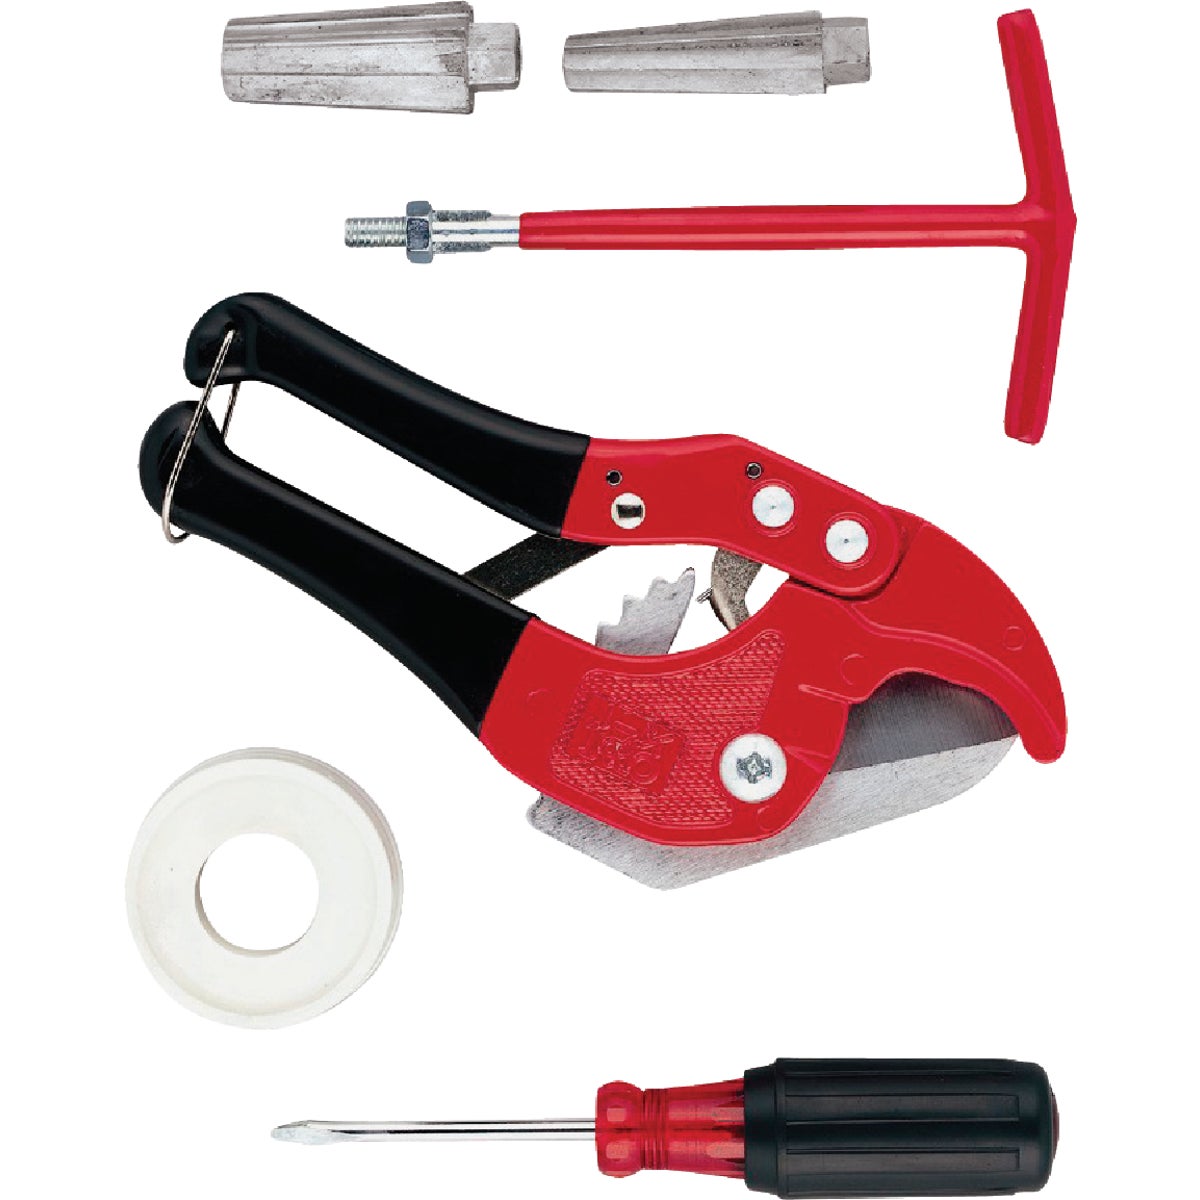 Item 768280, Sprinkler tool kit for maintenance and installation.